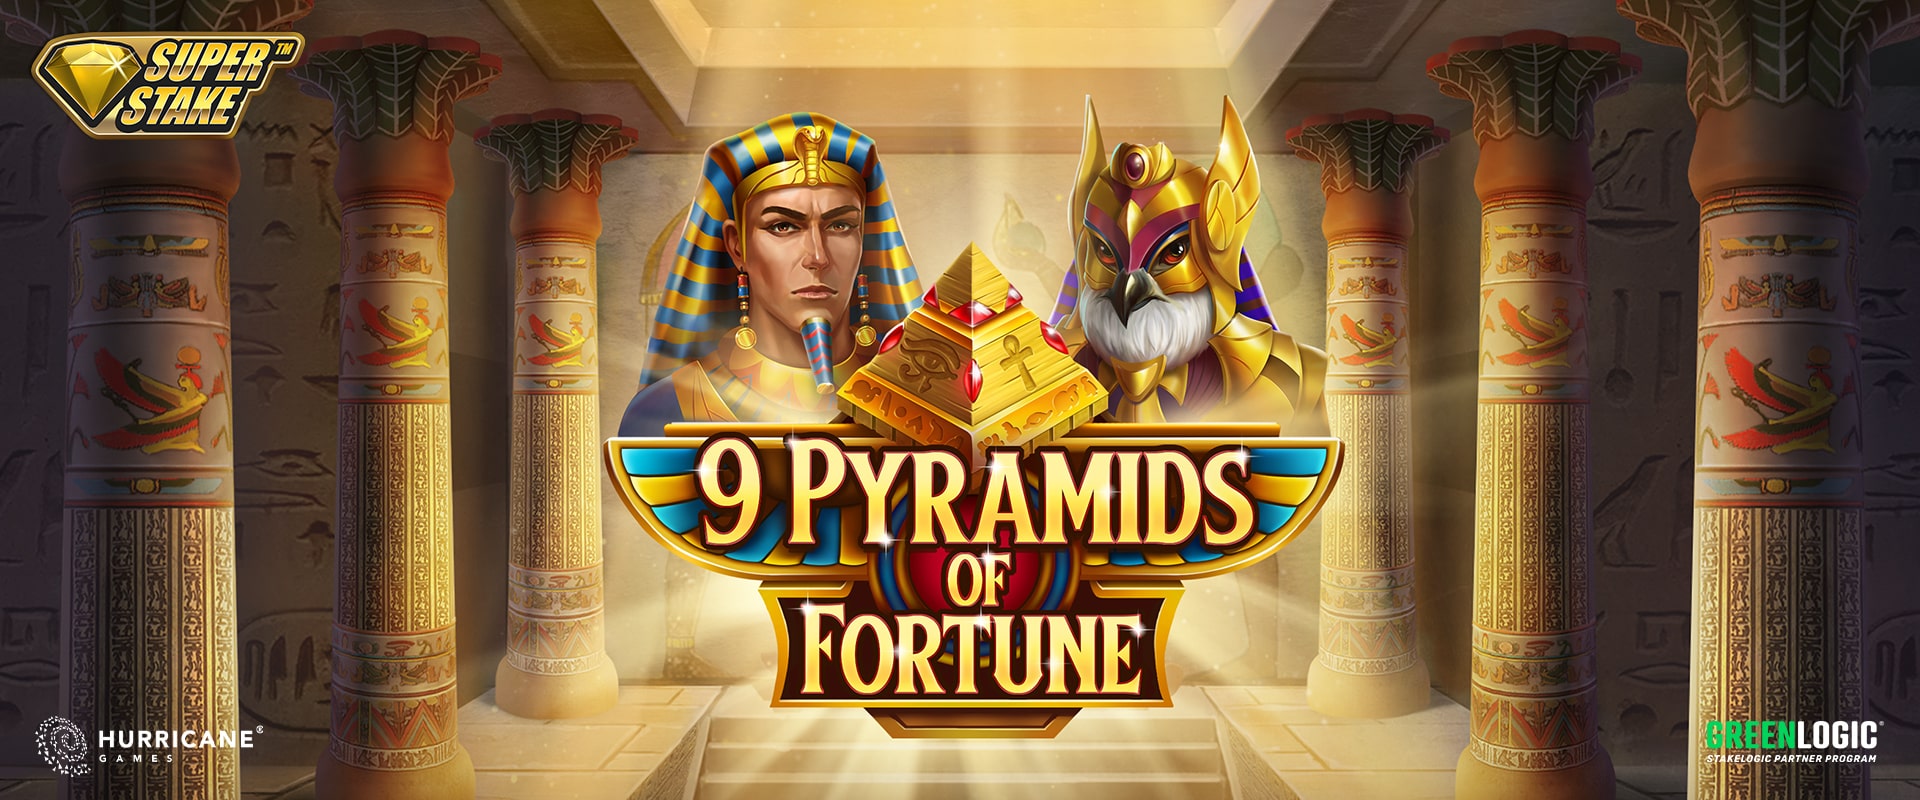 Hurricane Games Stakelogic Nine Pyramids of Fortune